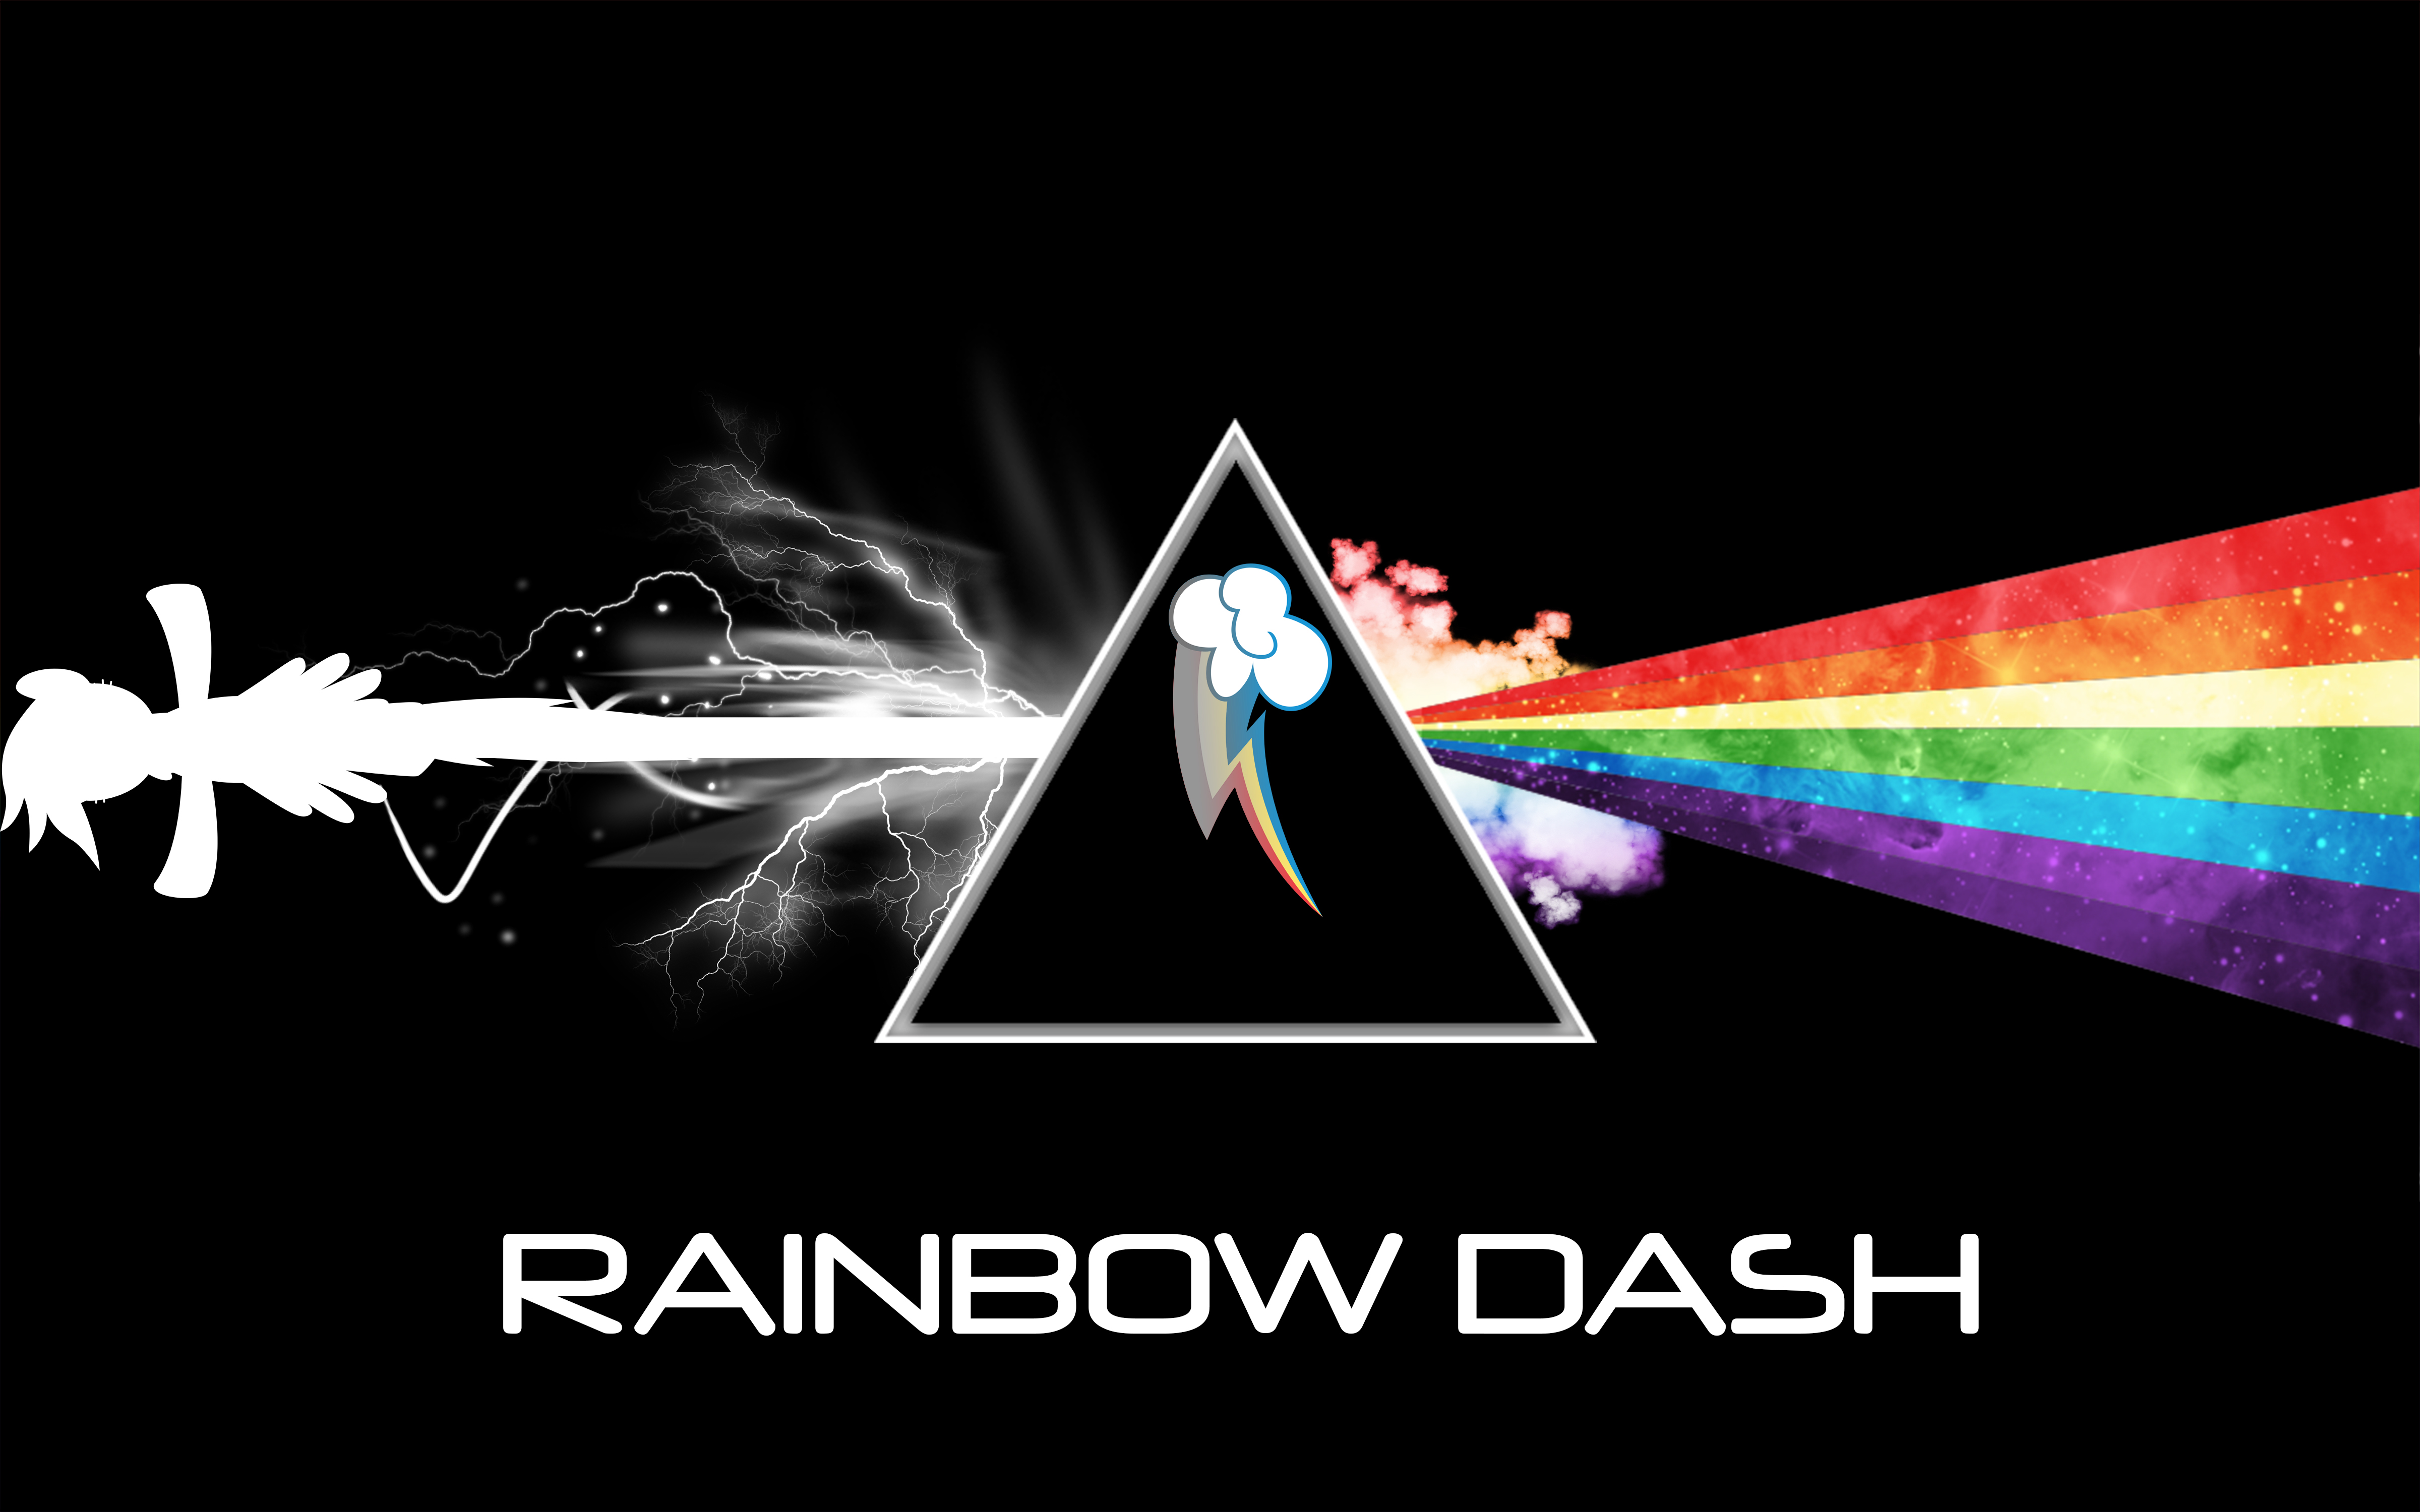 Rainbow Dash Wallpaper High Quality | PixelsTalk.Net